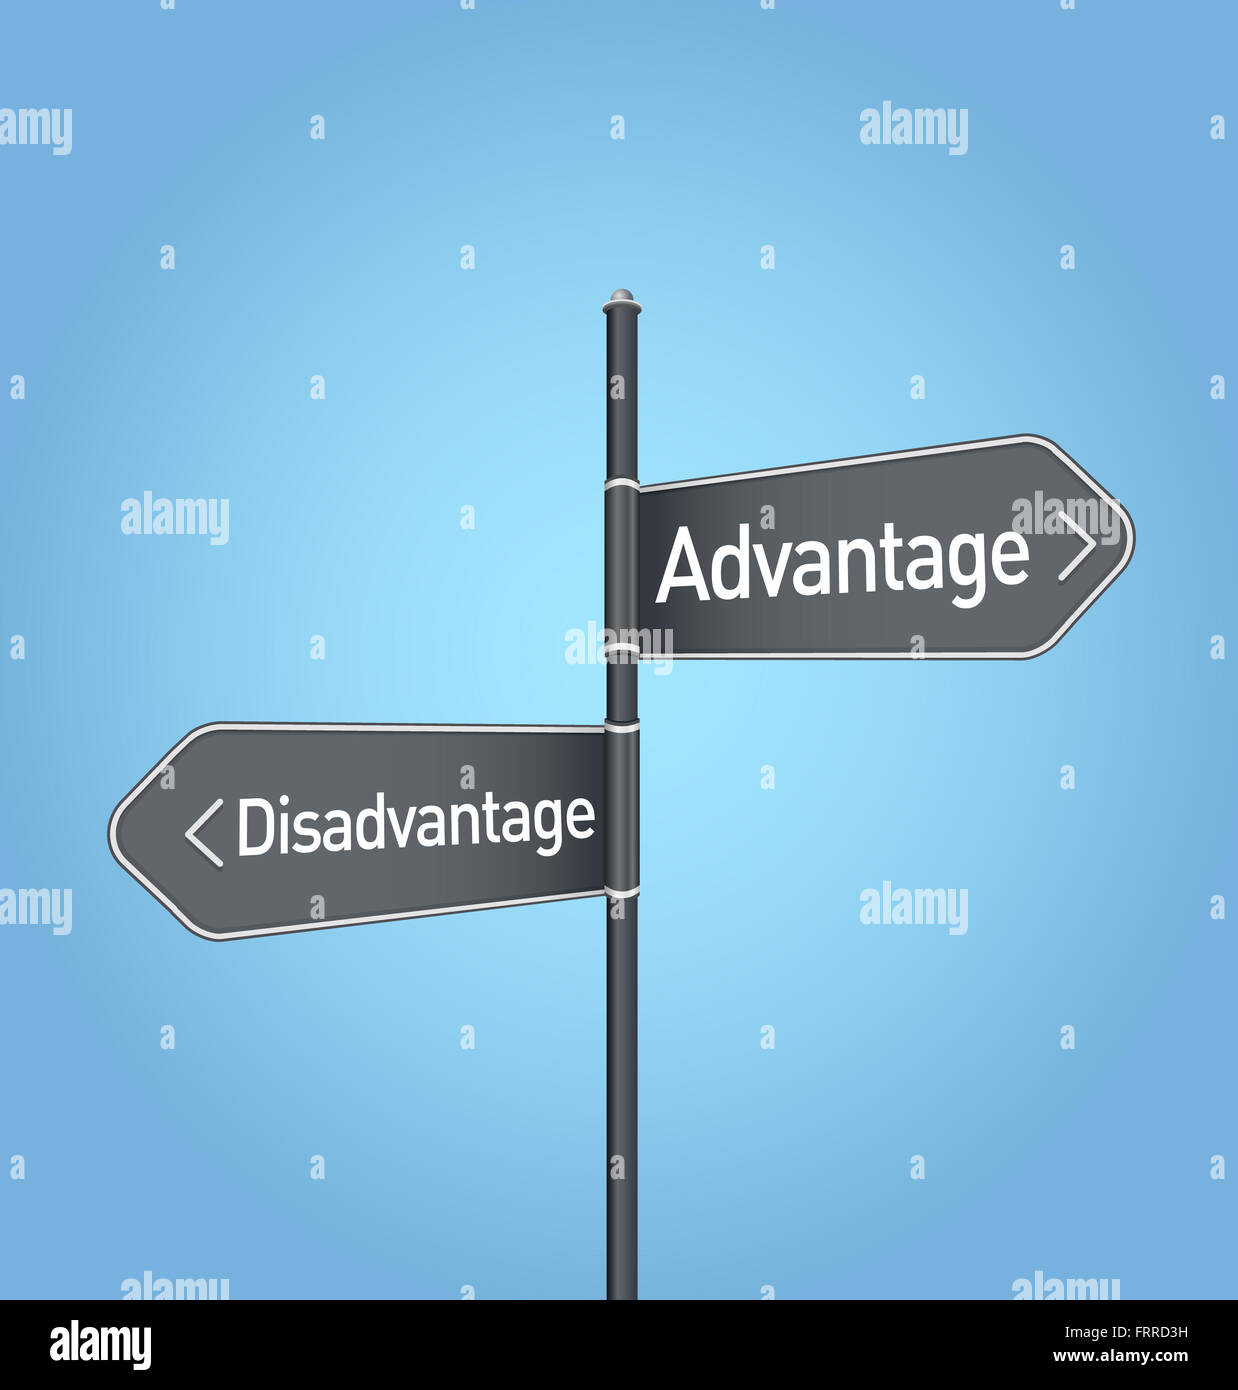 Advantage vs disadvantage choice concept road sign on blue background Stock Photo